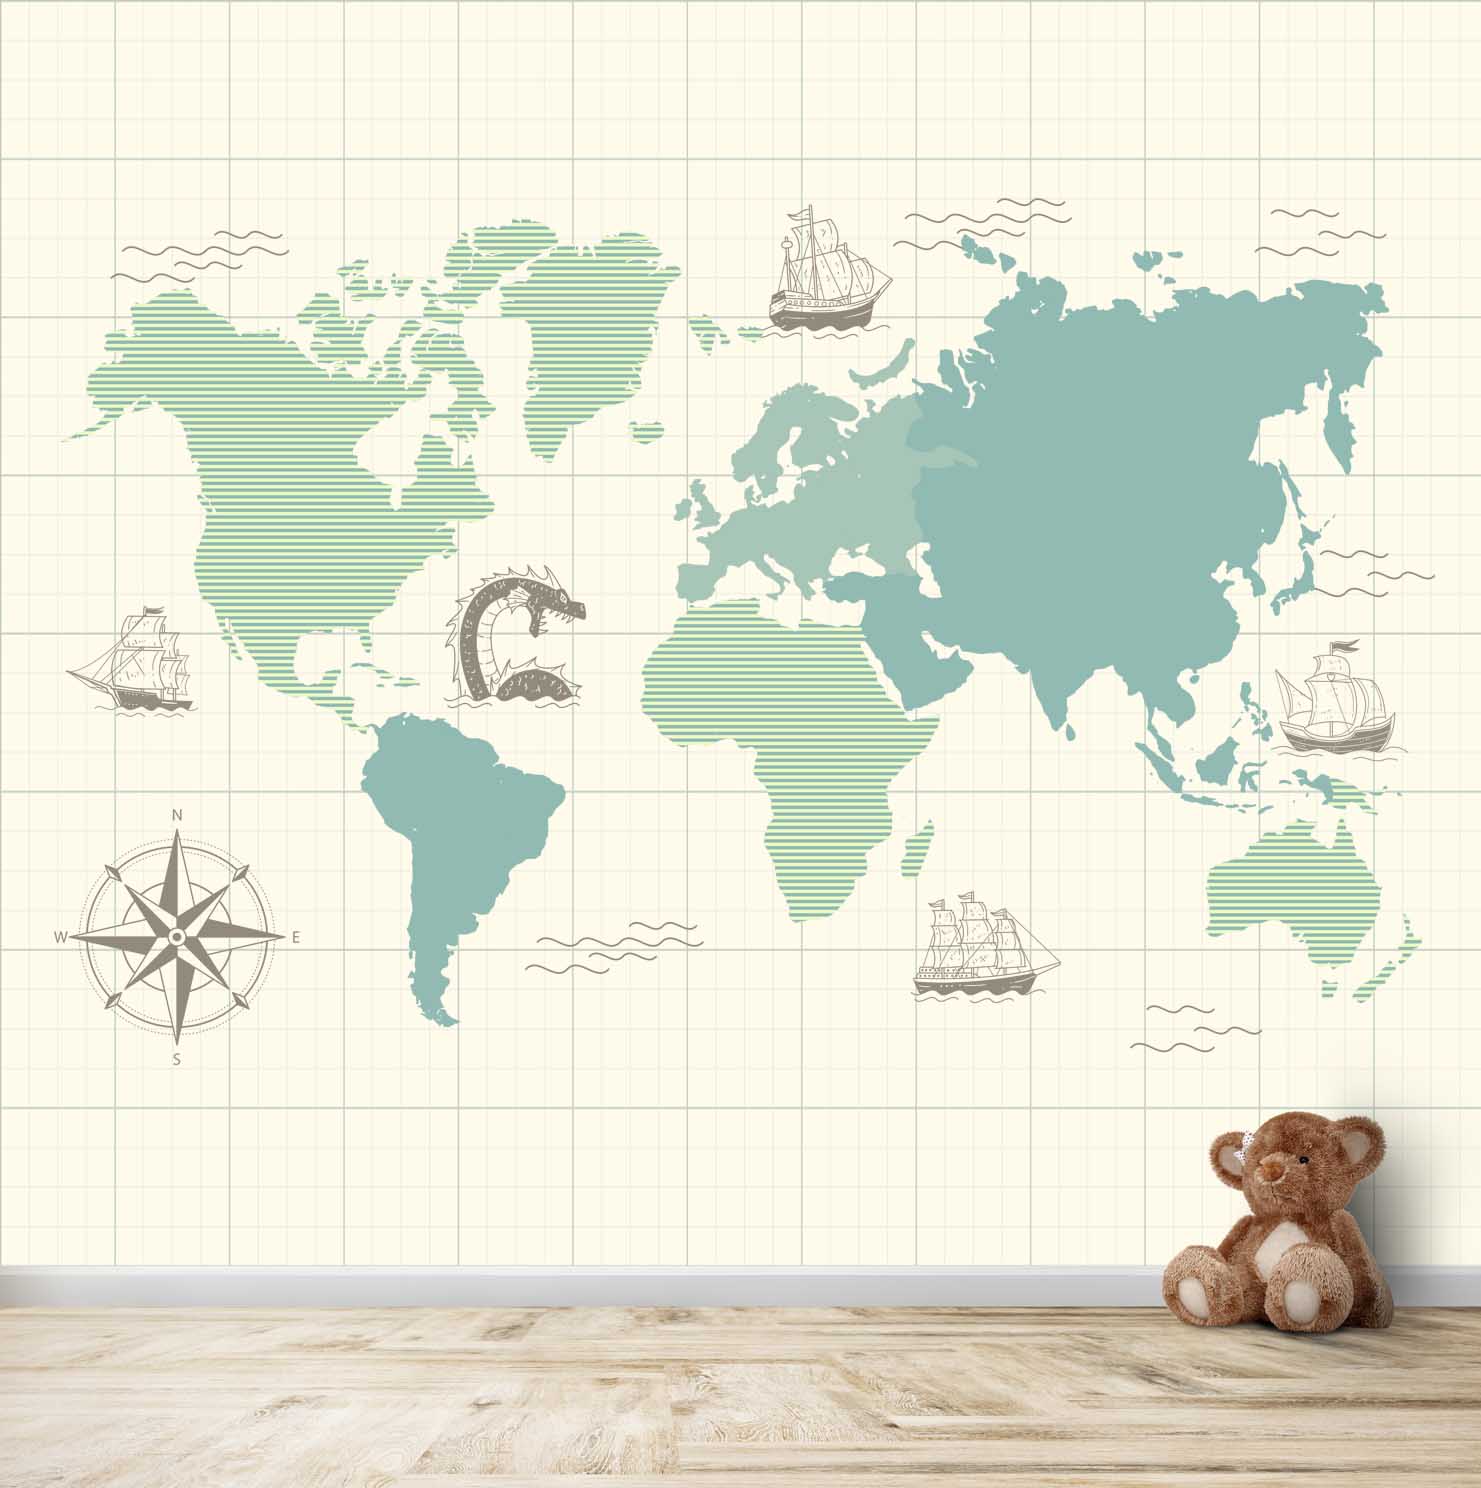 Big Pastel Green World Map for Kids Room Walls